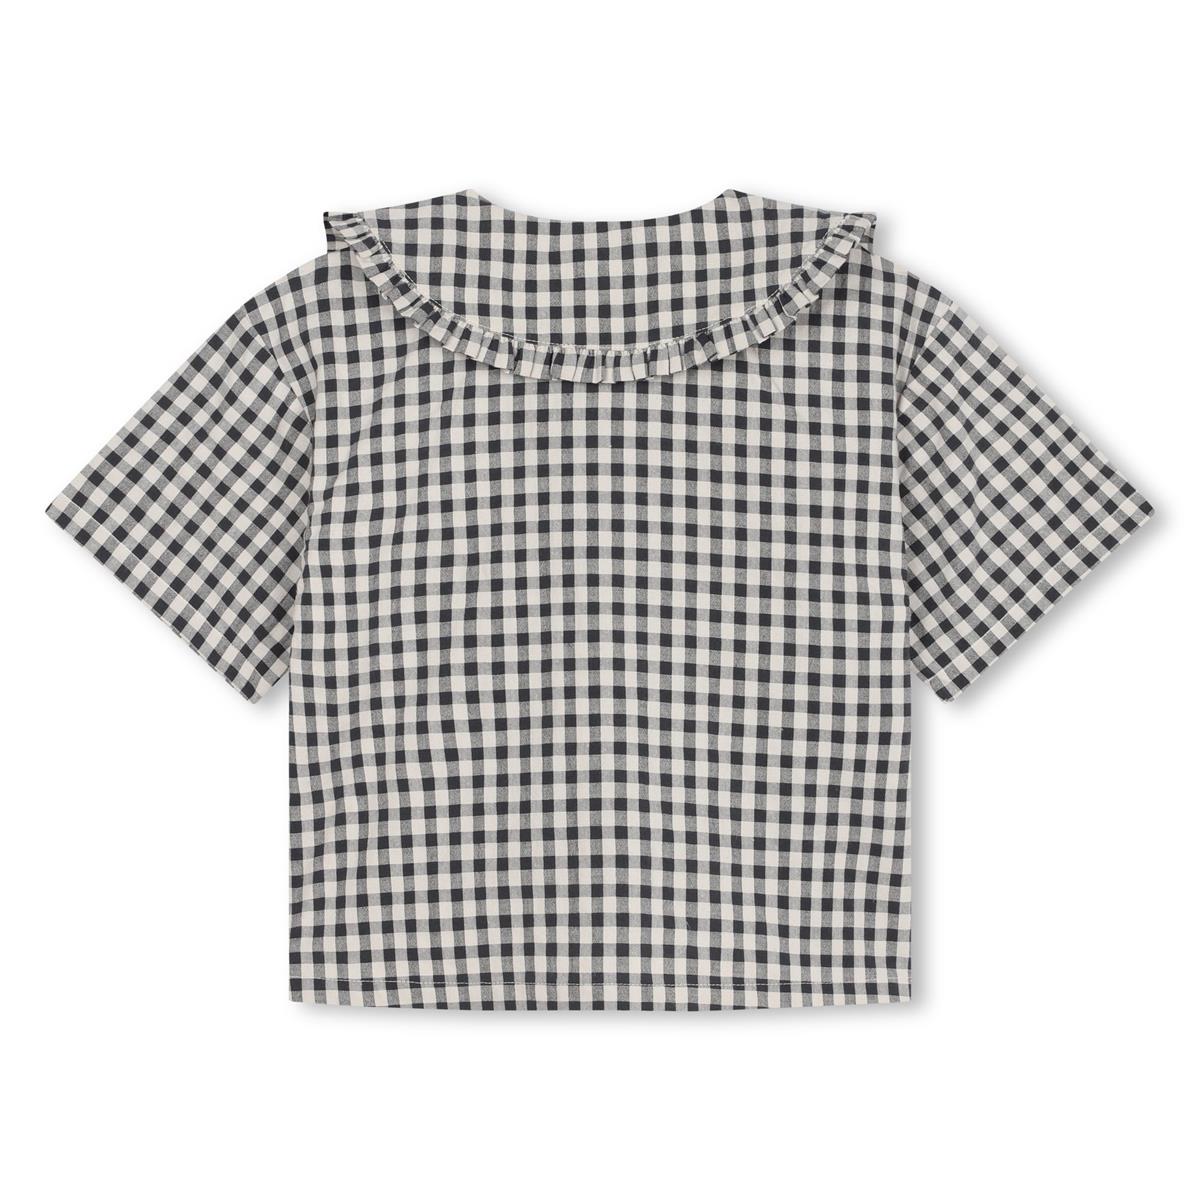 Girls Grey Check Cotton Shirt